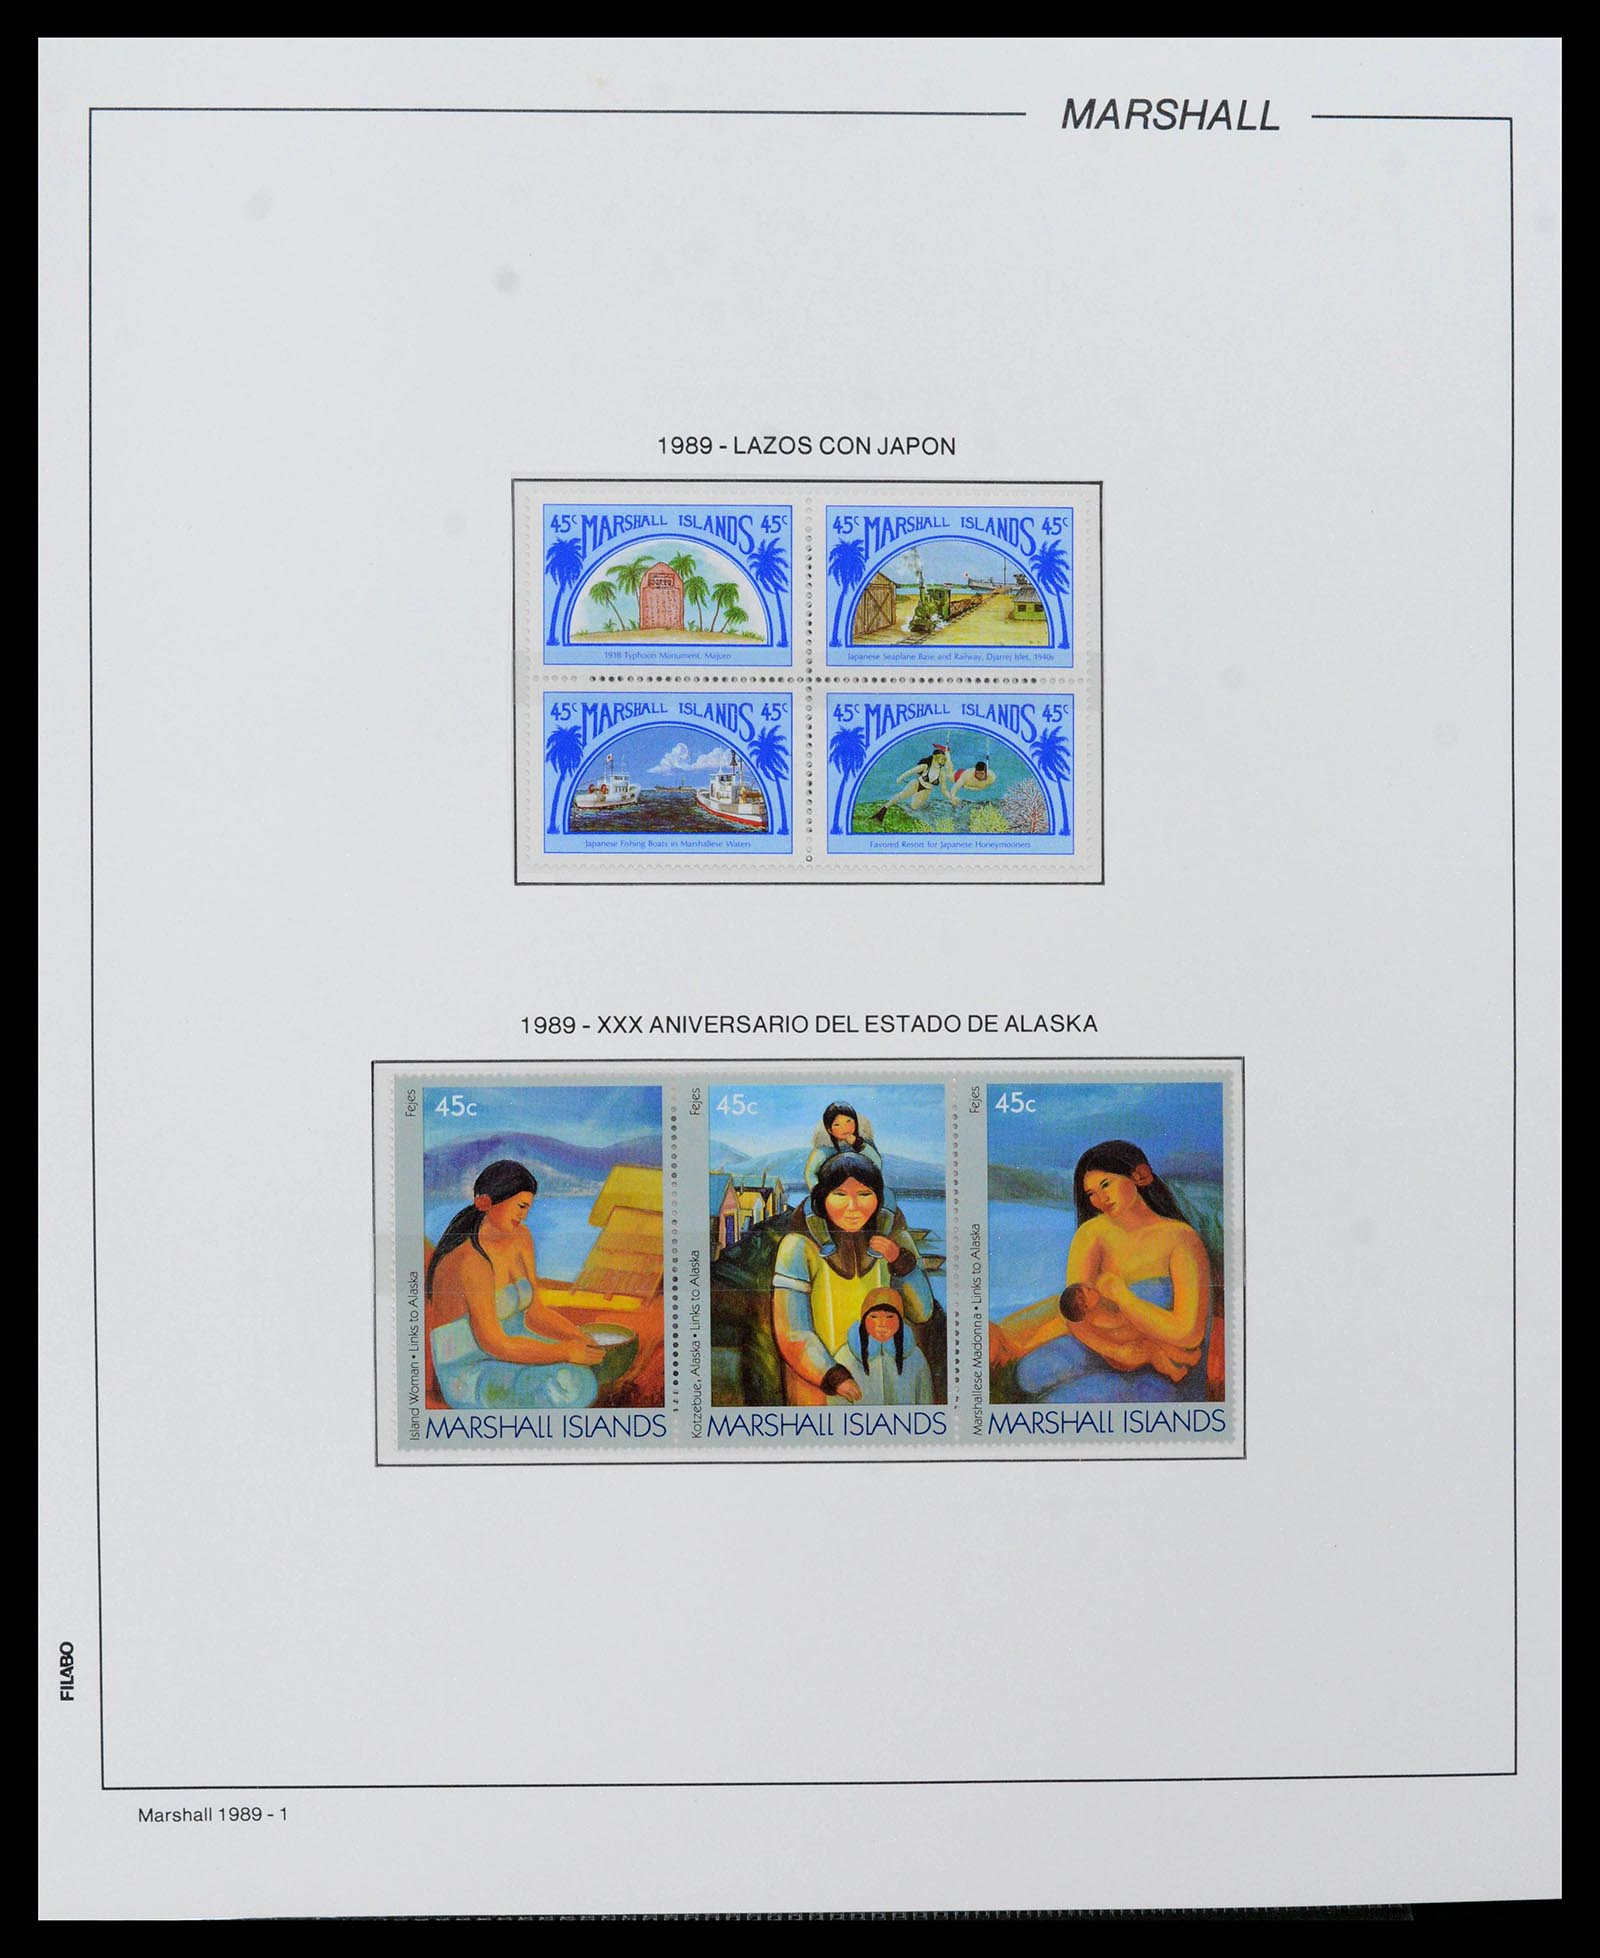 39222 0135 - Stamp collection 39222 Palau, Micronesia and Marshall islands 1980-1995.